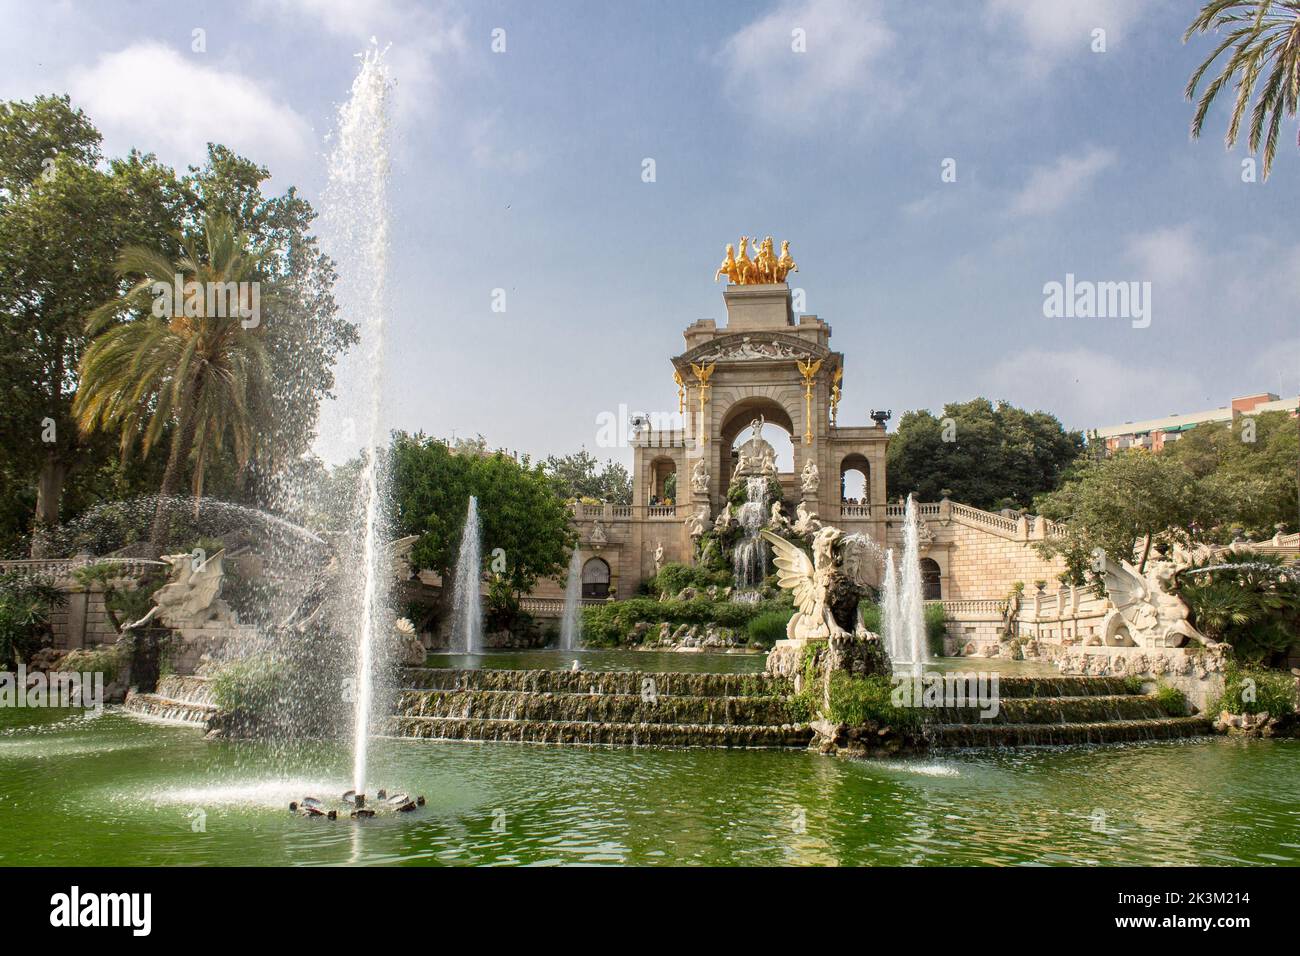 The famous Parc de la Ciutadella fountain on a sunny morning Stock Photo